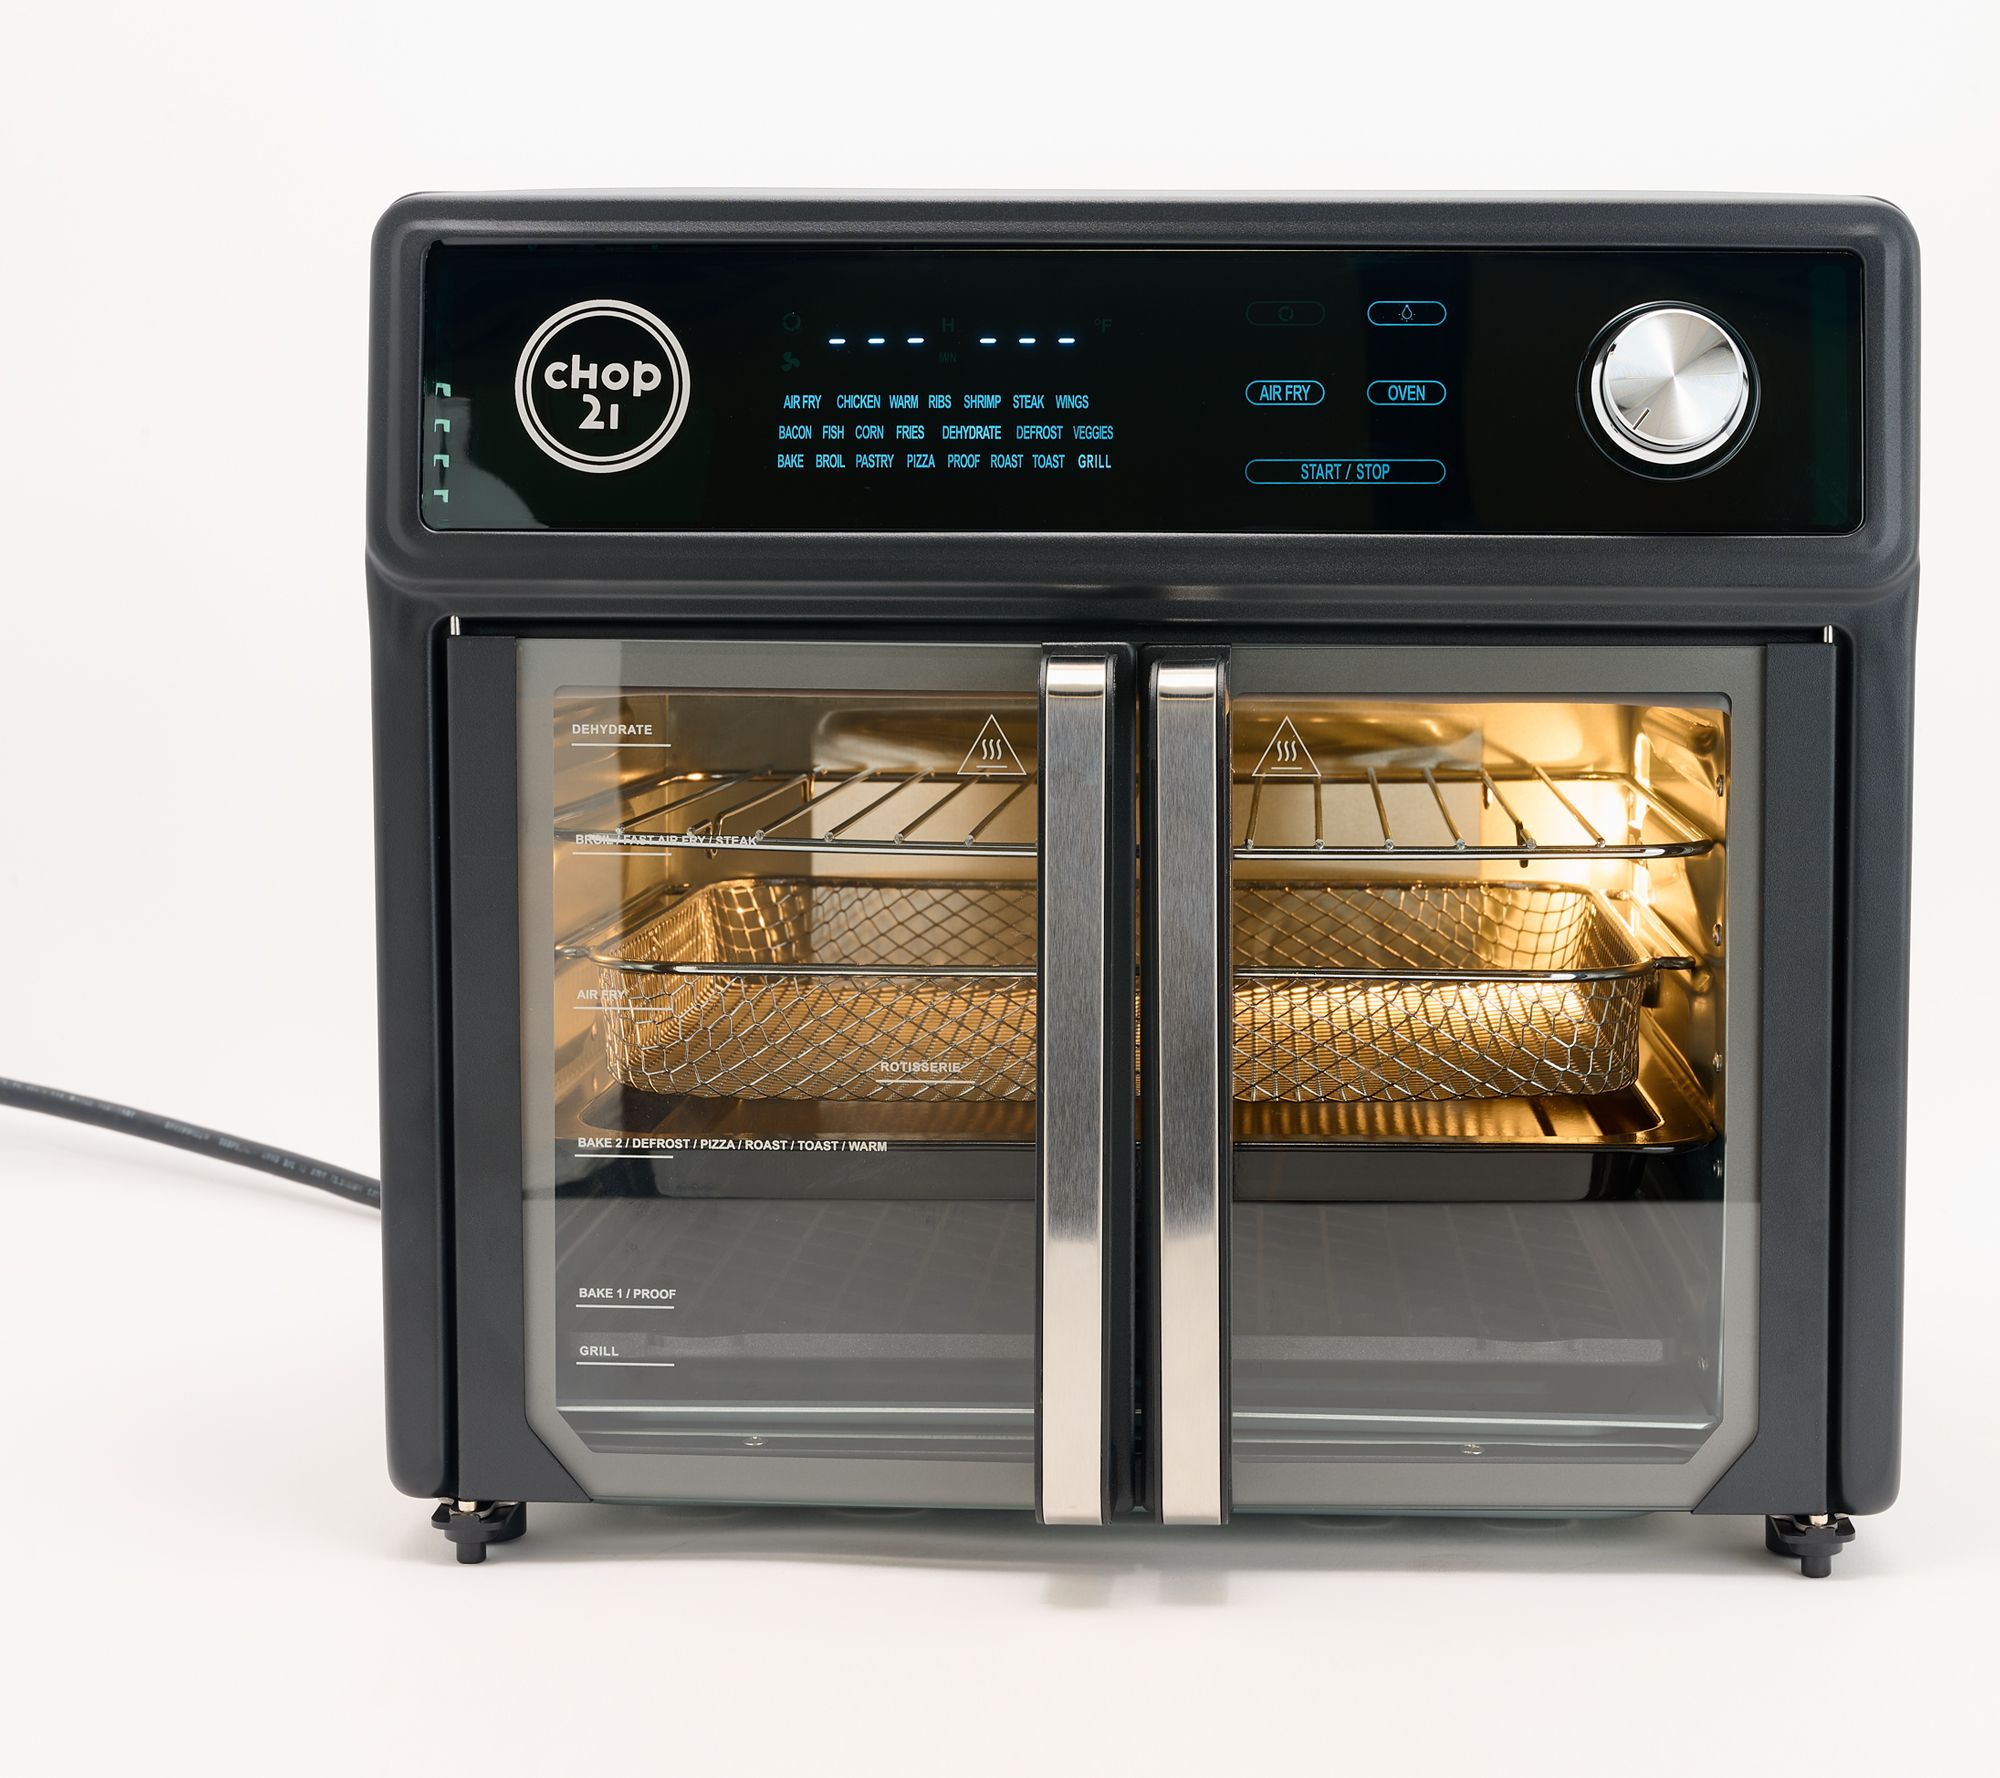 Kalorik French Door Air Fryer 26Qt Digital MAXX 10-in-1 Toaster Oven With